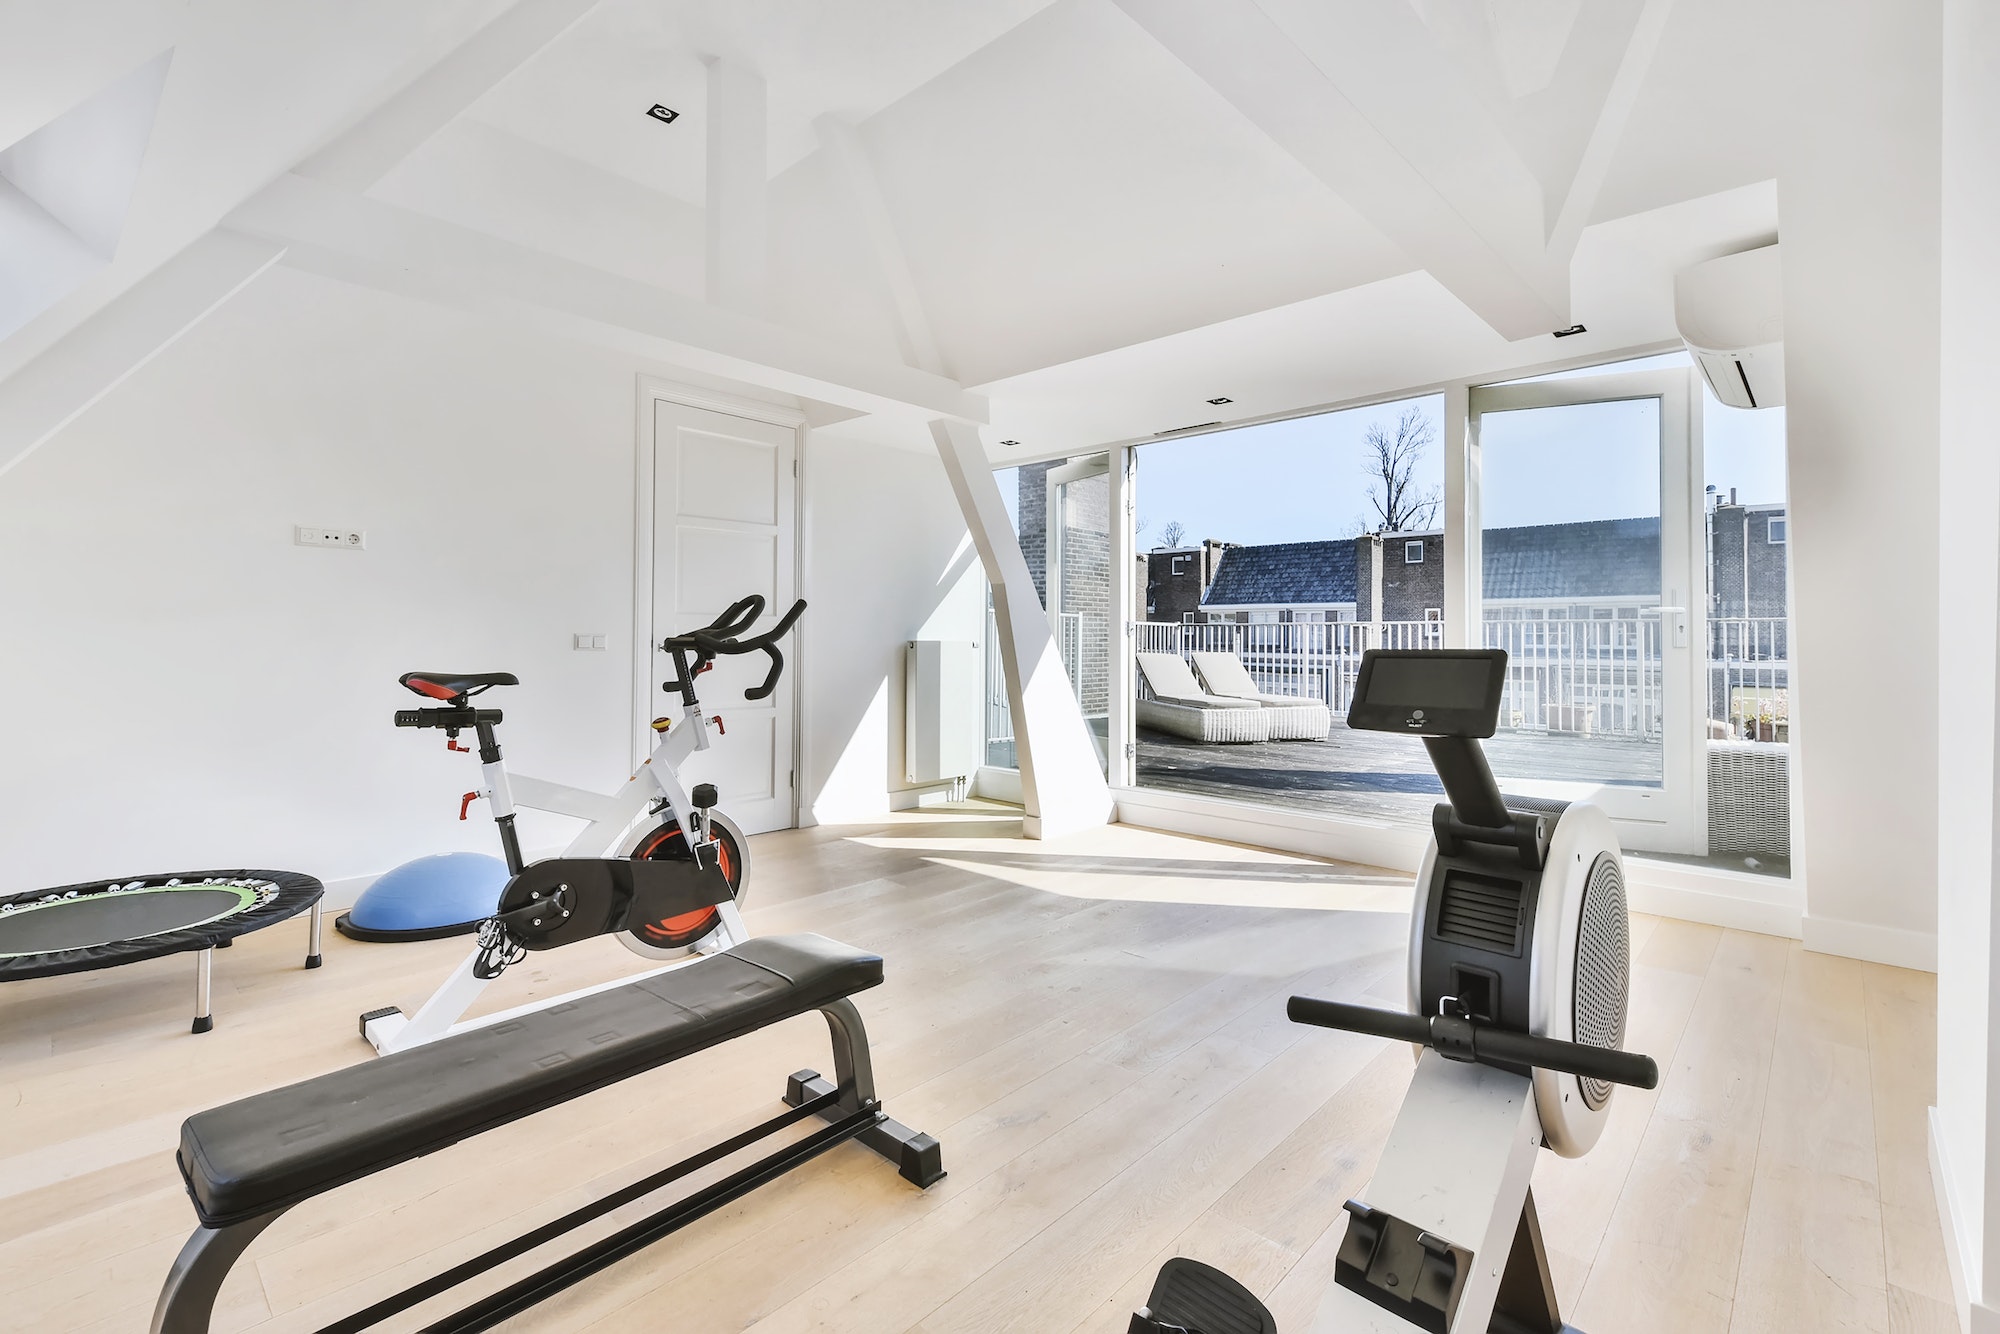 House training gym with exercising machines